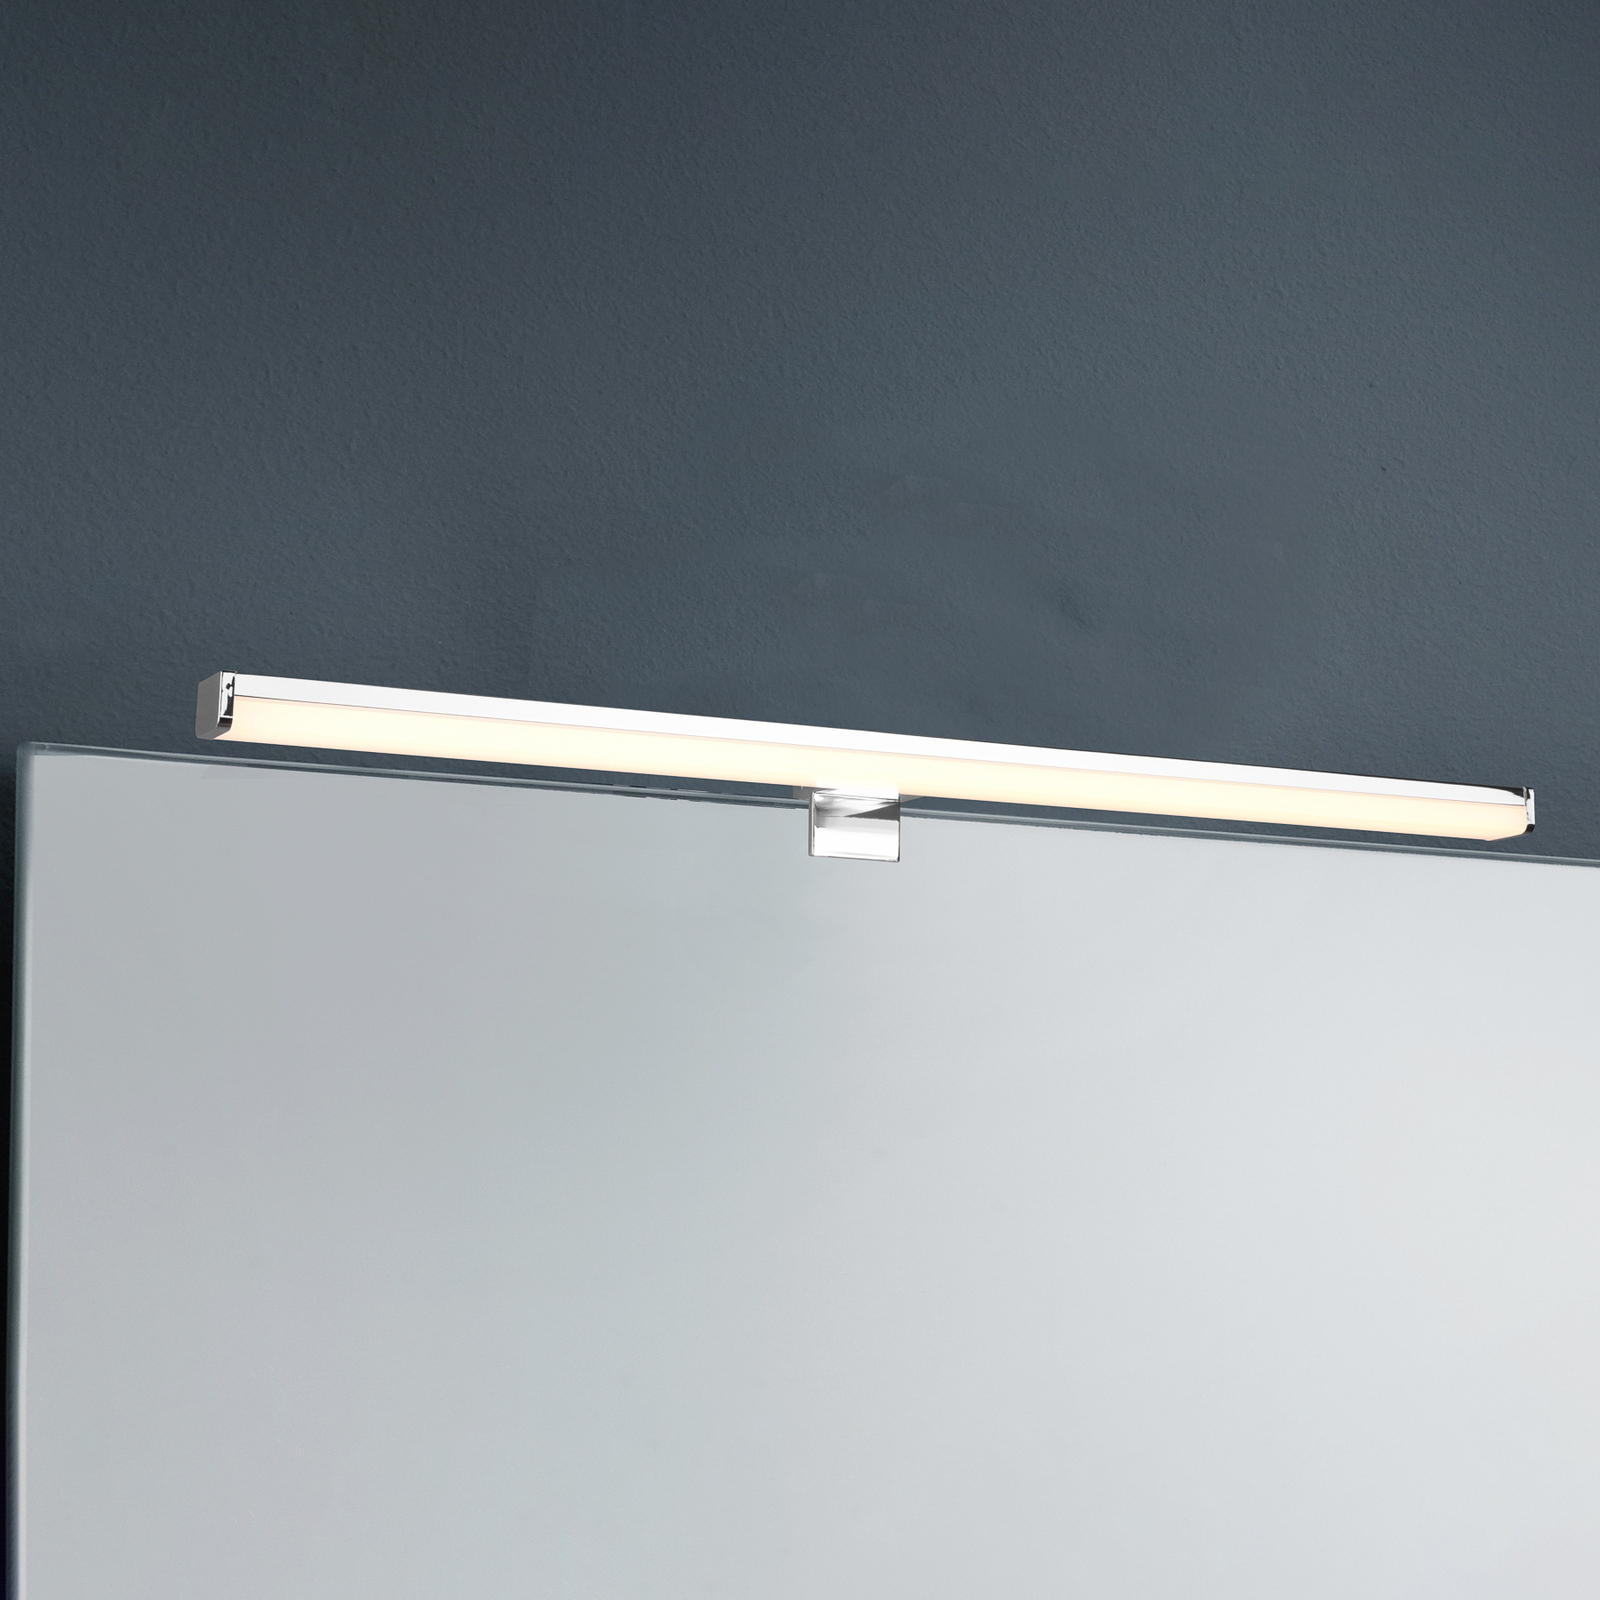 LED fali lámpa Lino, króm/fehér